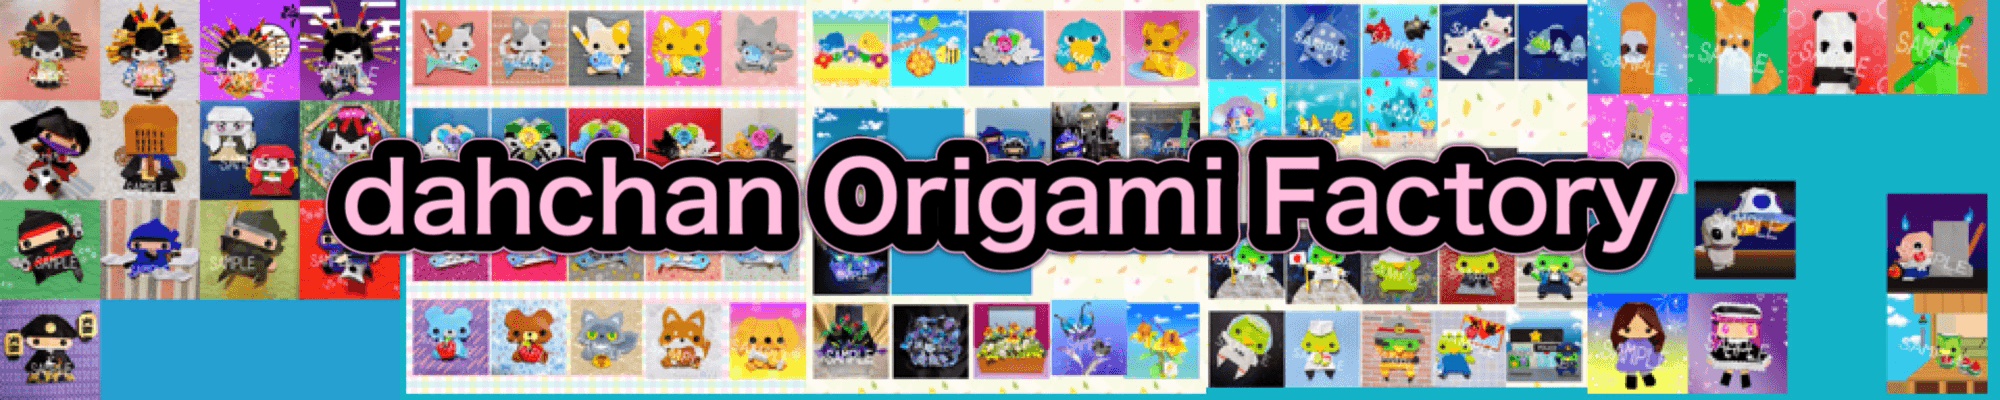 dahchan_origami_Factory bannière